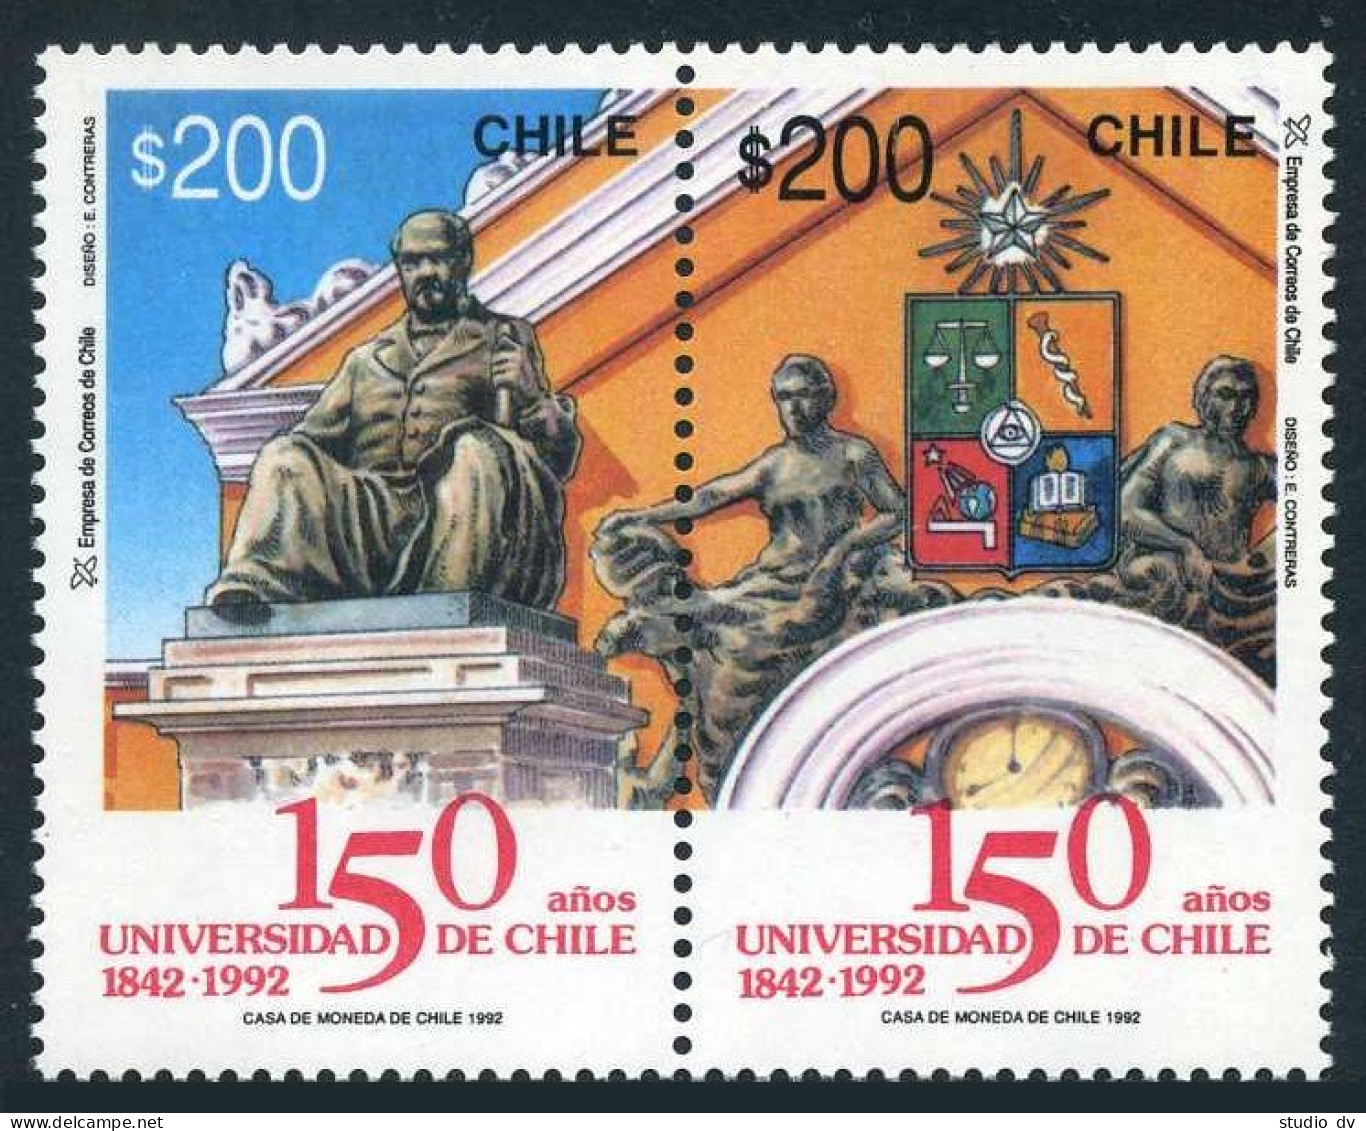 Chile 1034 Ab Pair,MNH. Mi 1534-1535. University Of Chile,150th Ann.1992.Statue, - Chili